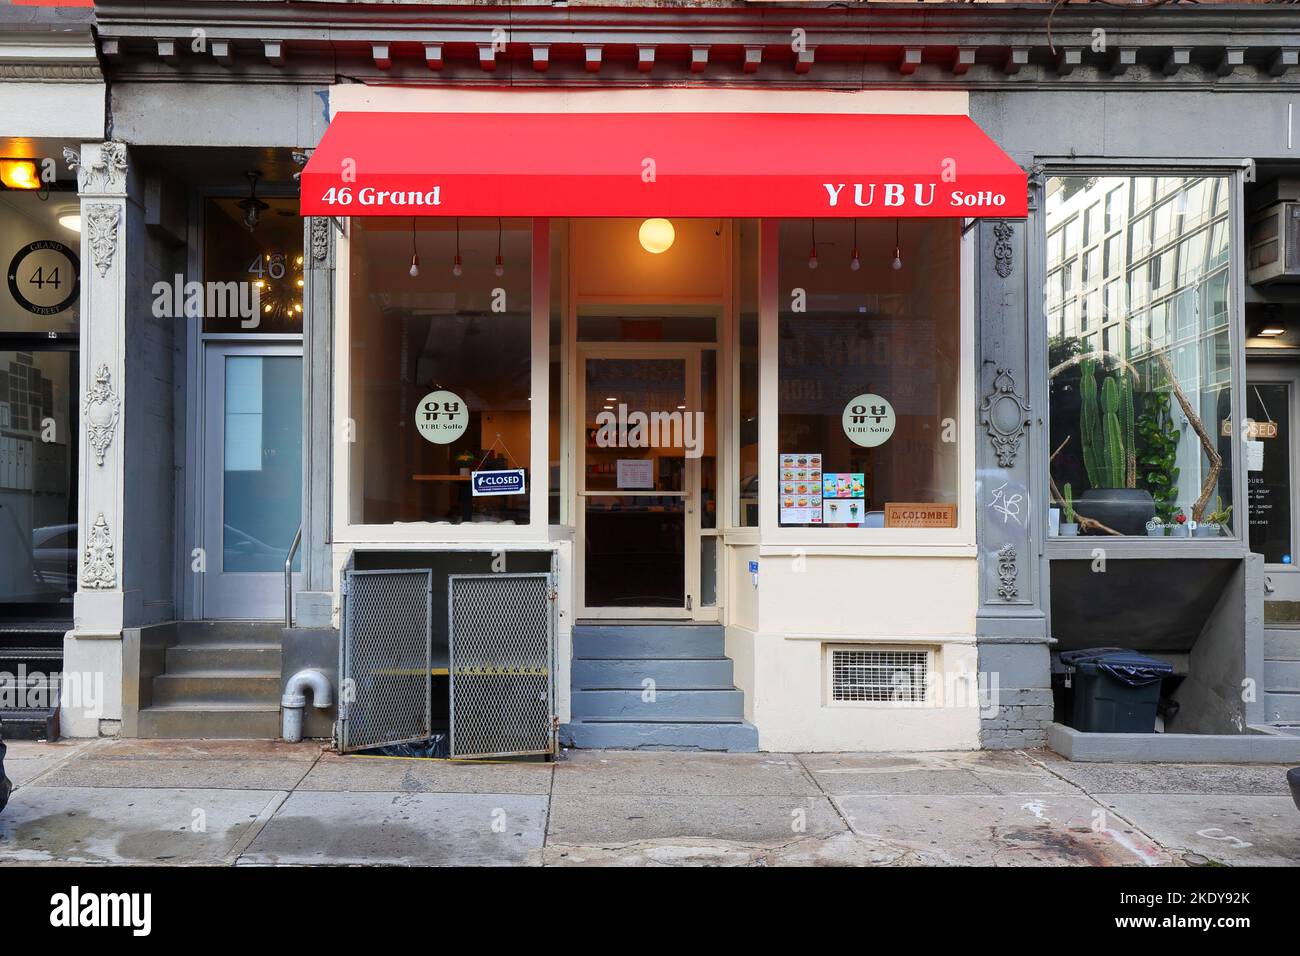 Yubu 유부, 46 Grand St, New York, NYC photo d'un restaurant de poche tofu coréen dans le quartier SoHo de Manhattan. Banque D'Images